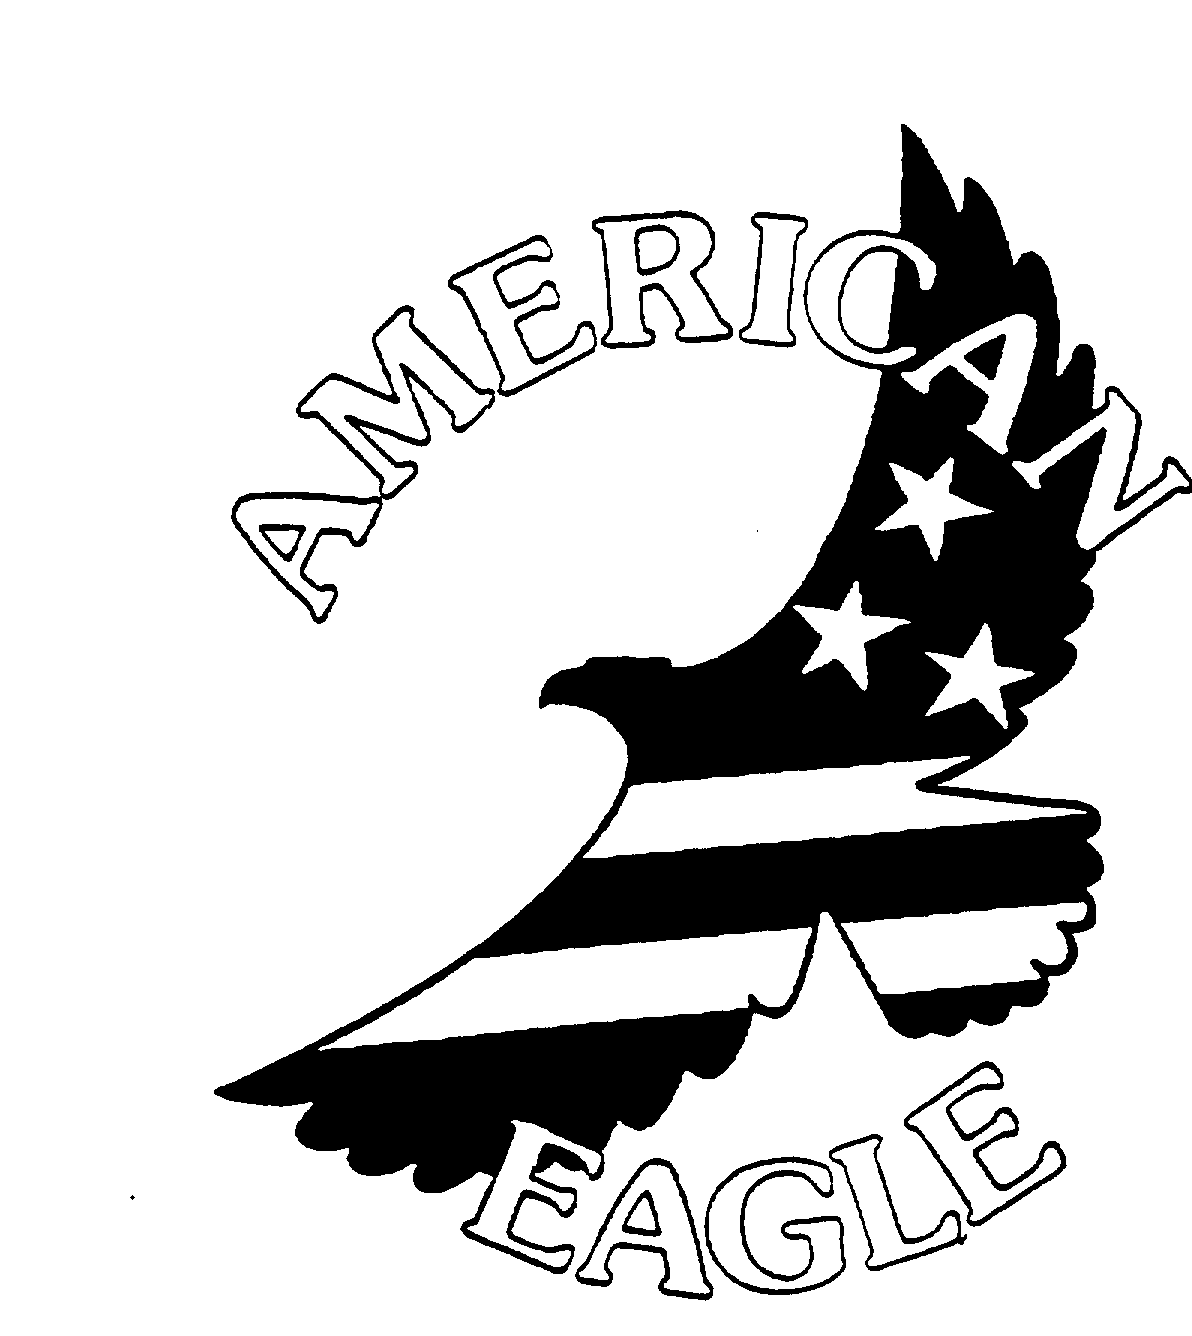 Trademark Logo AMERICAN EAGLE